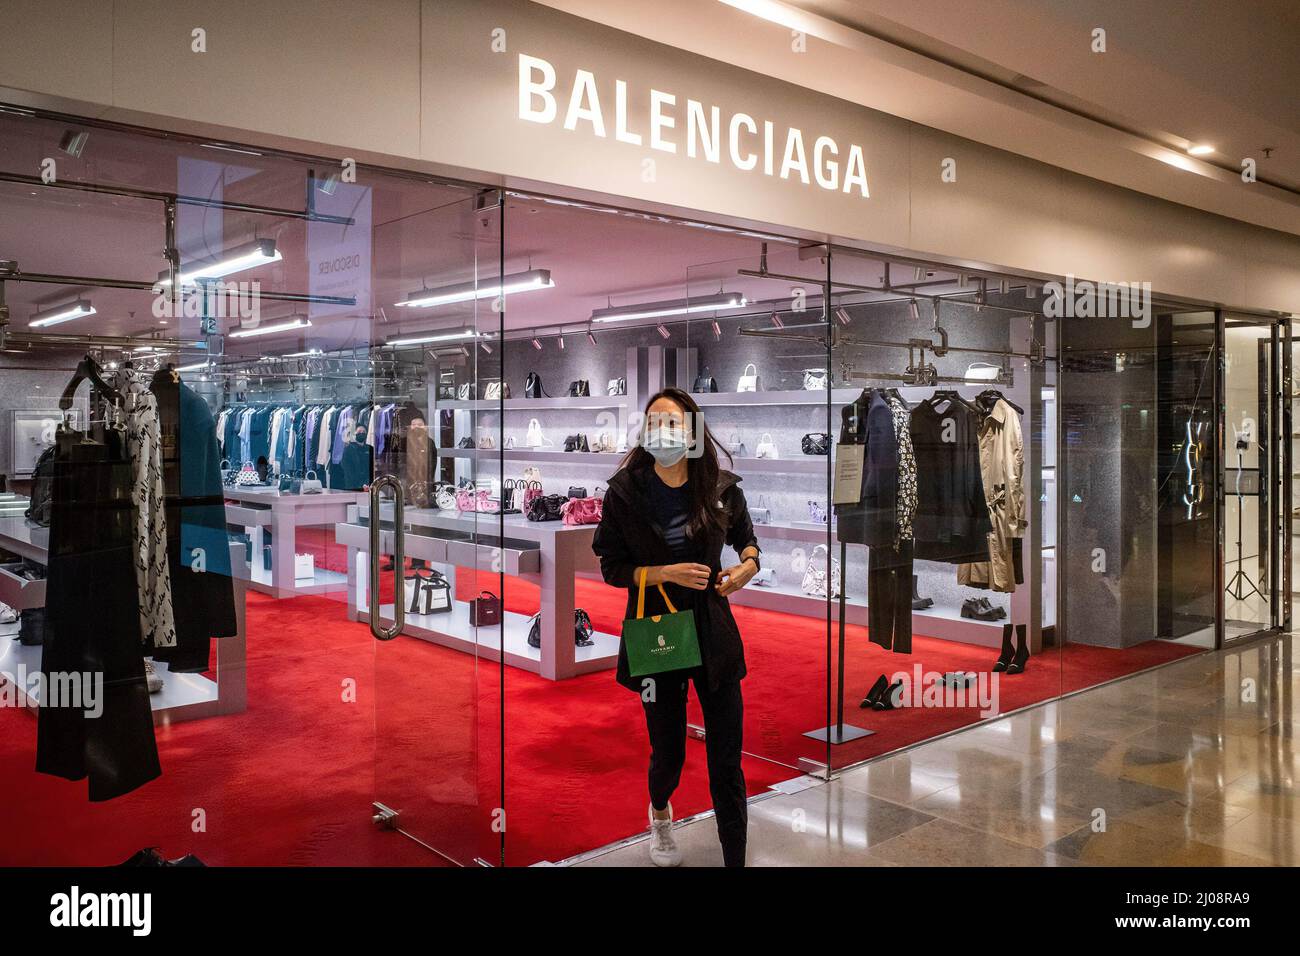 Balenciaga store -Fotos und -Bildmaterial in hoher Auflösung – Alamy